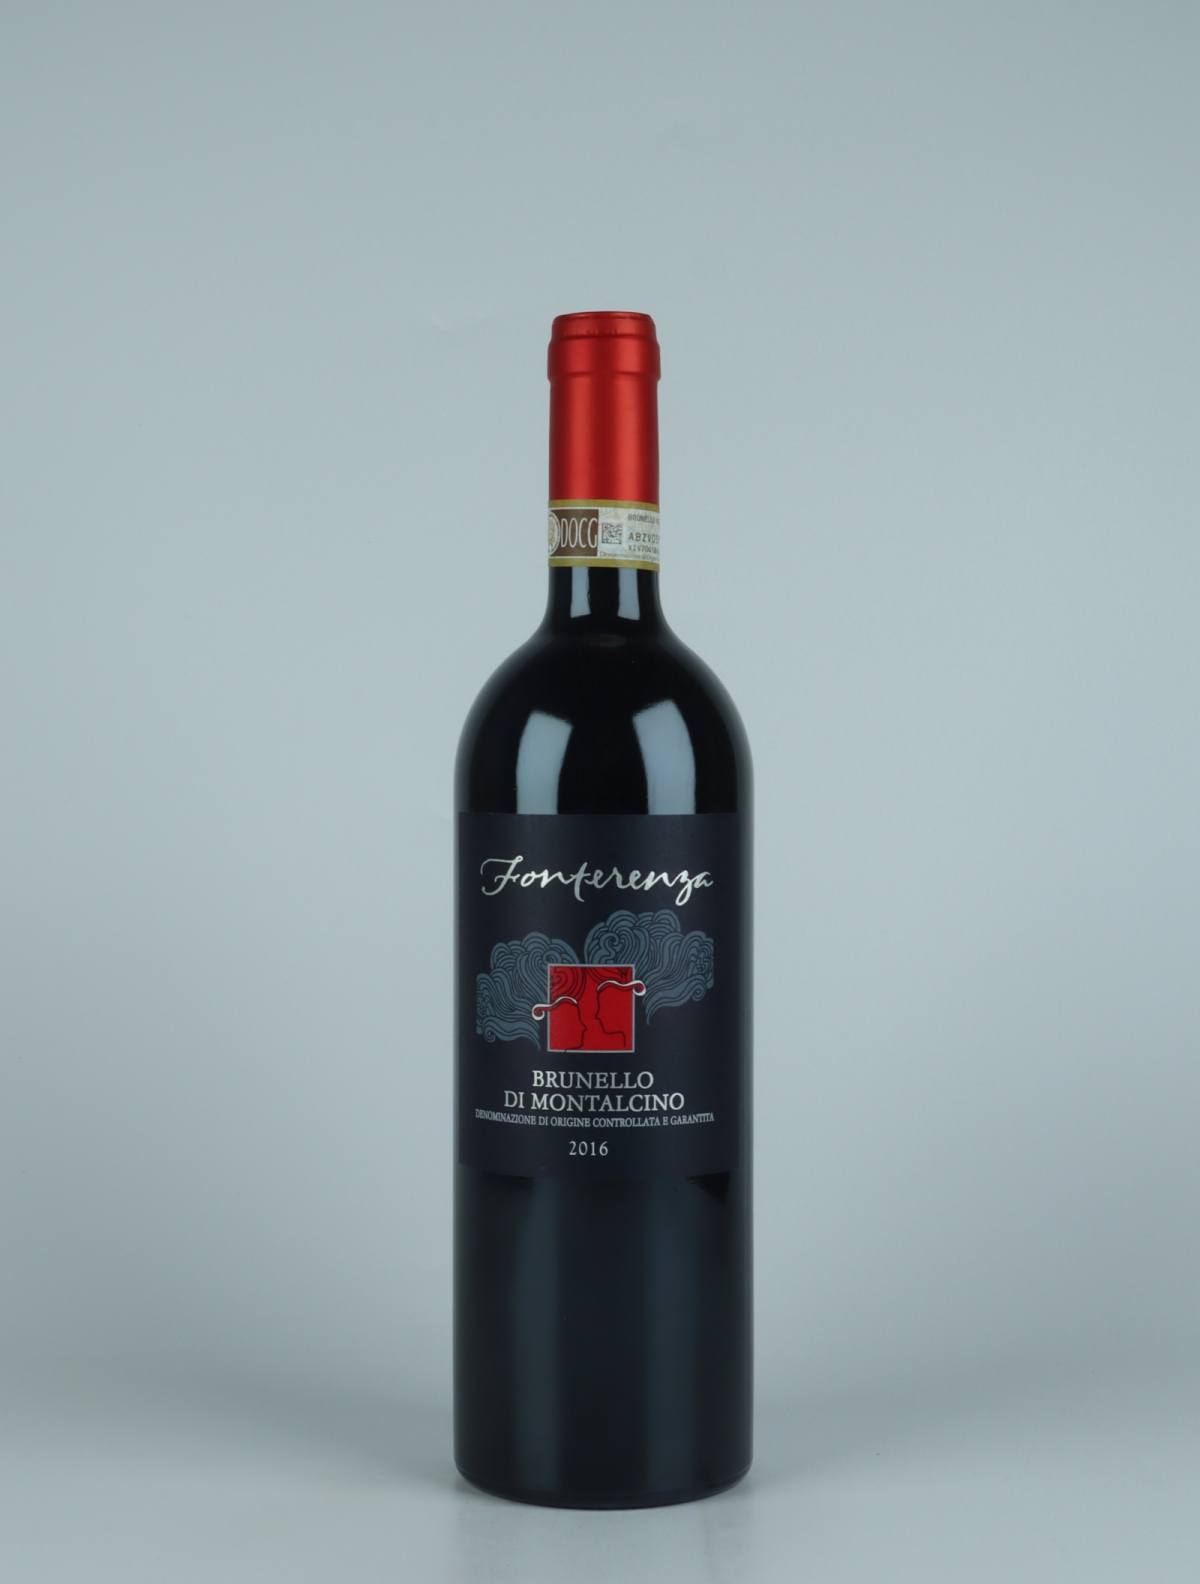 En flaske 2016 Brunello di Montalcino Rødvin fra Fonterenza, Toscana i Italien